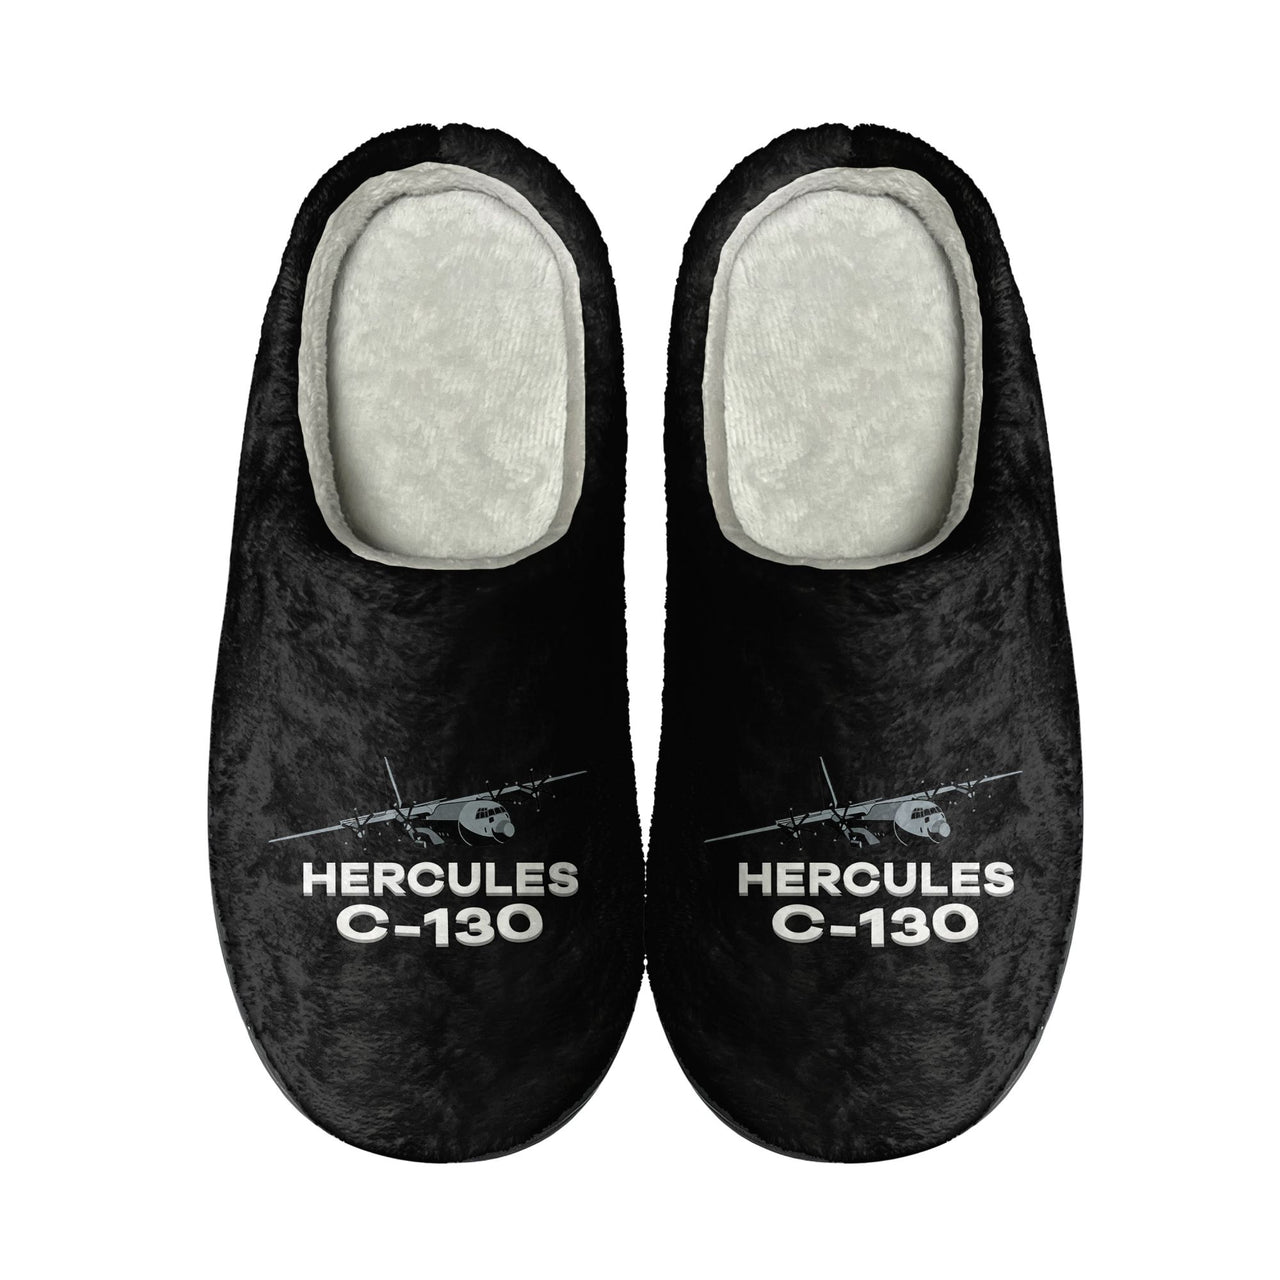 The Hercules C130 Designed Cotton Slippers